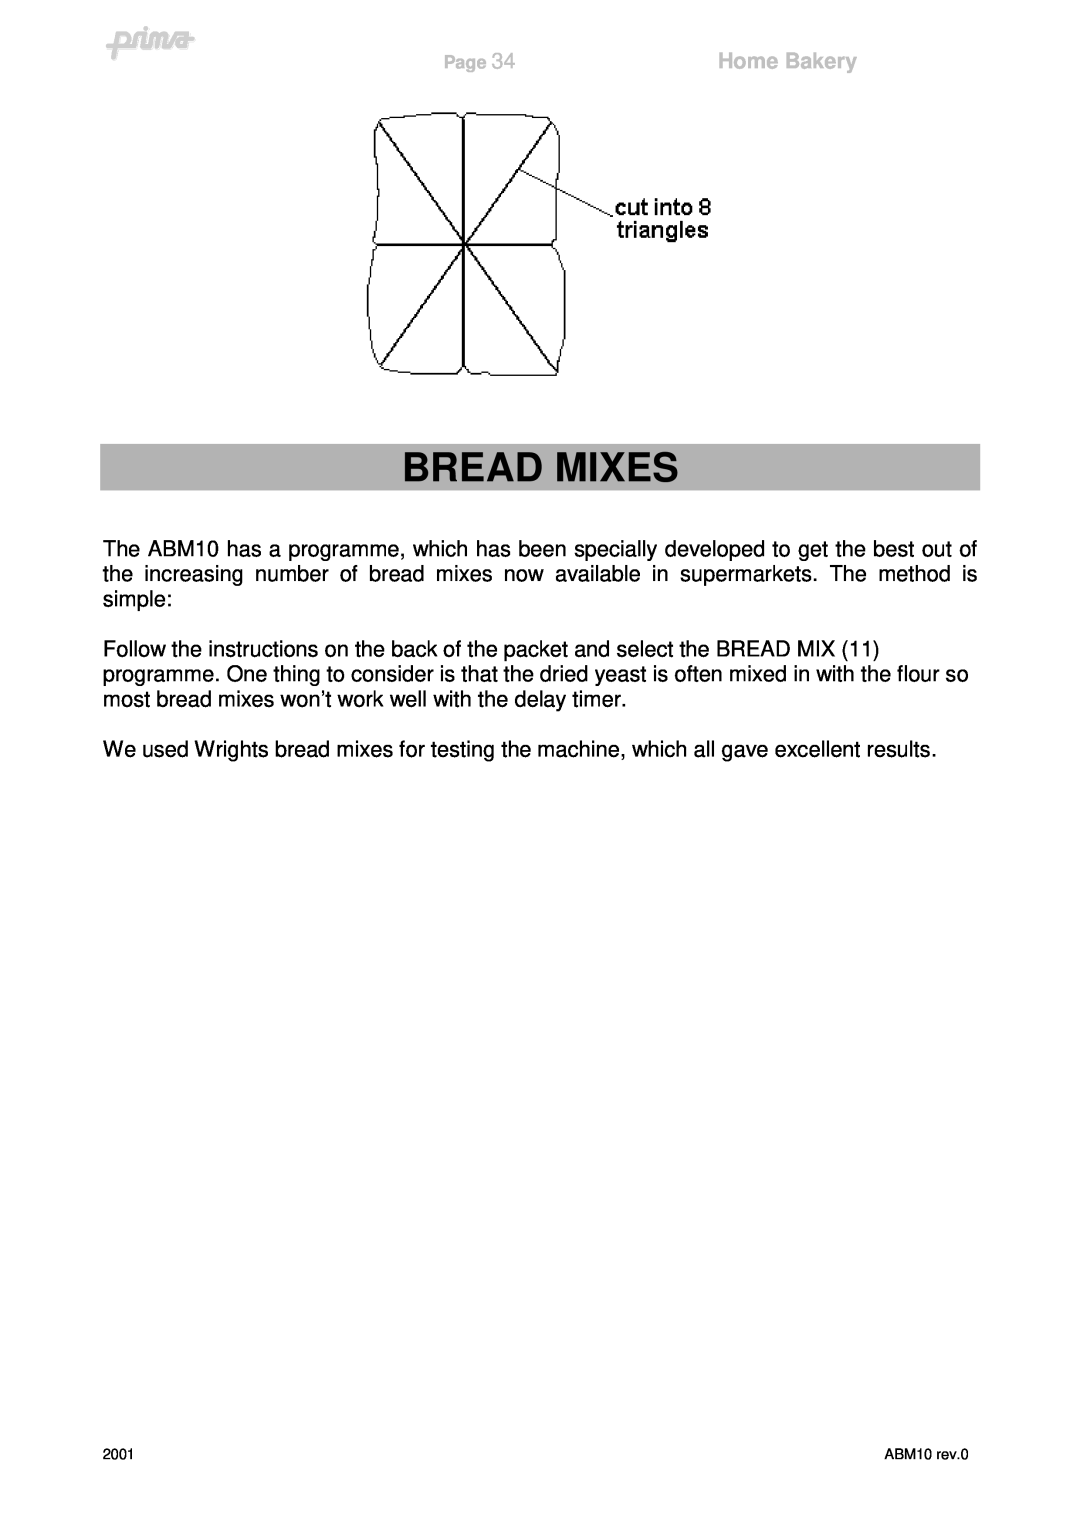 Prima ABM10 instruction manual Bread Mixes, Home Bakery 